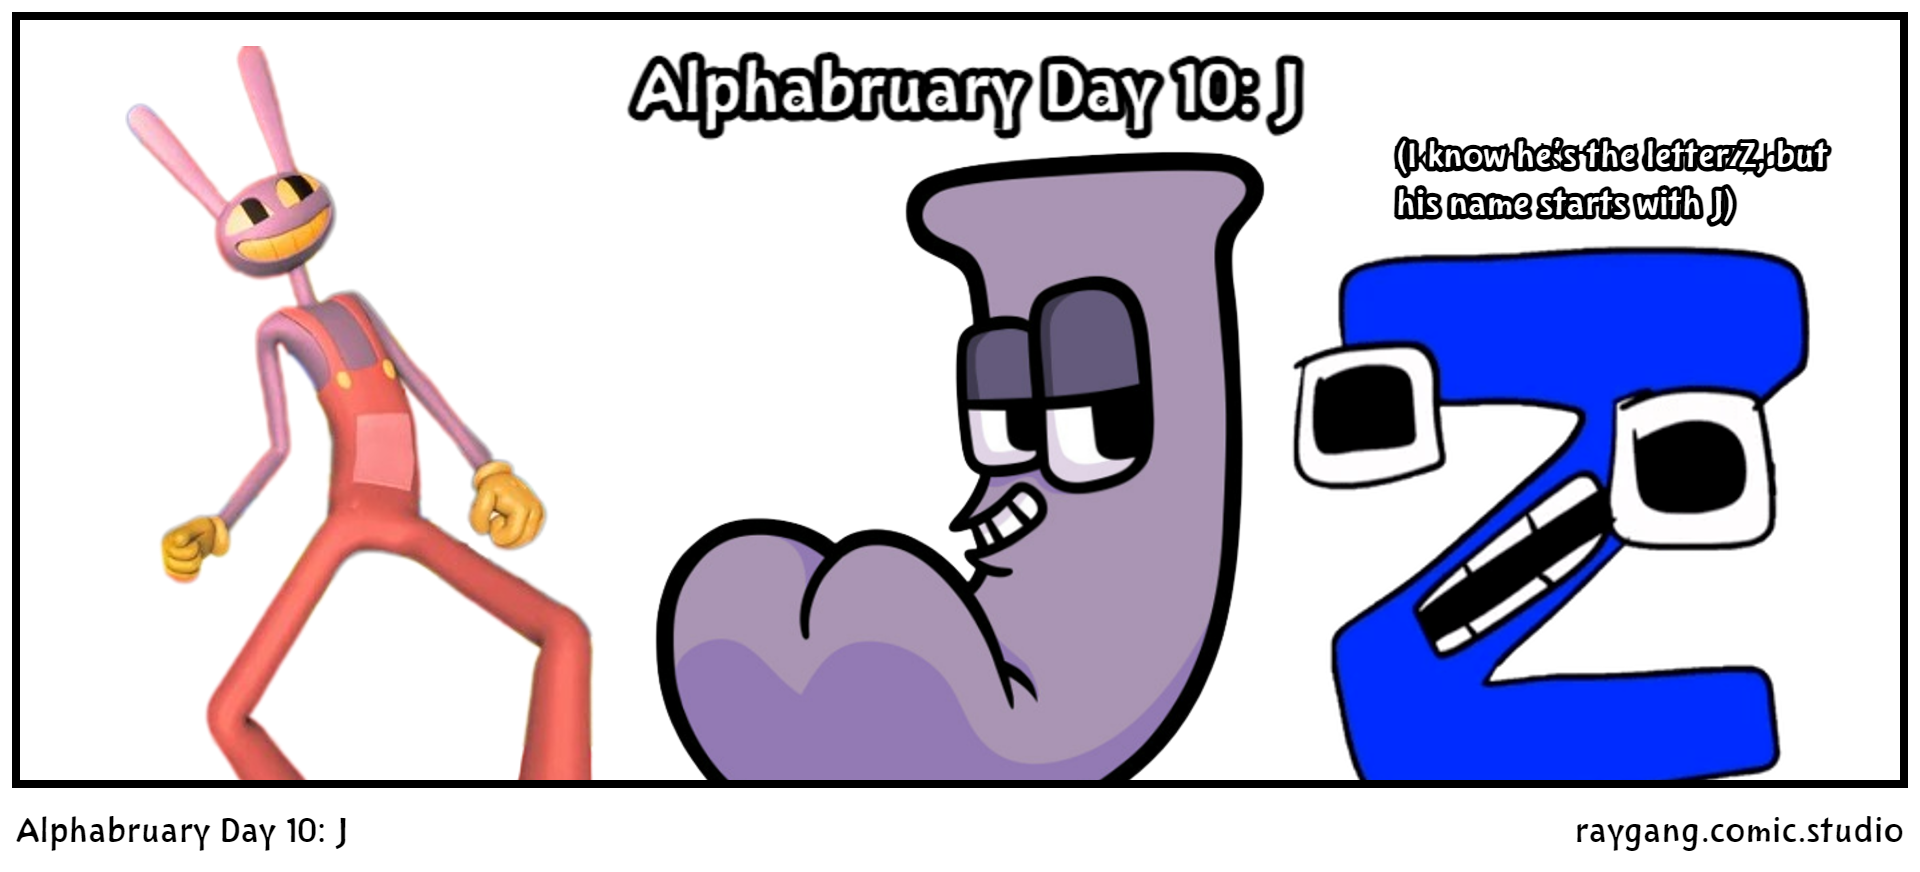 Alphabruary Day 10: J